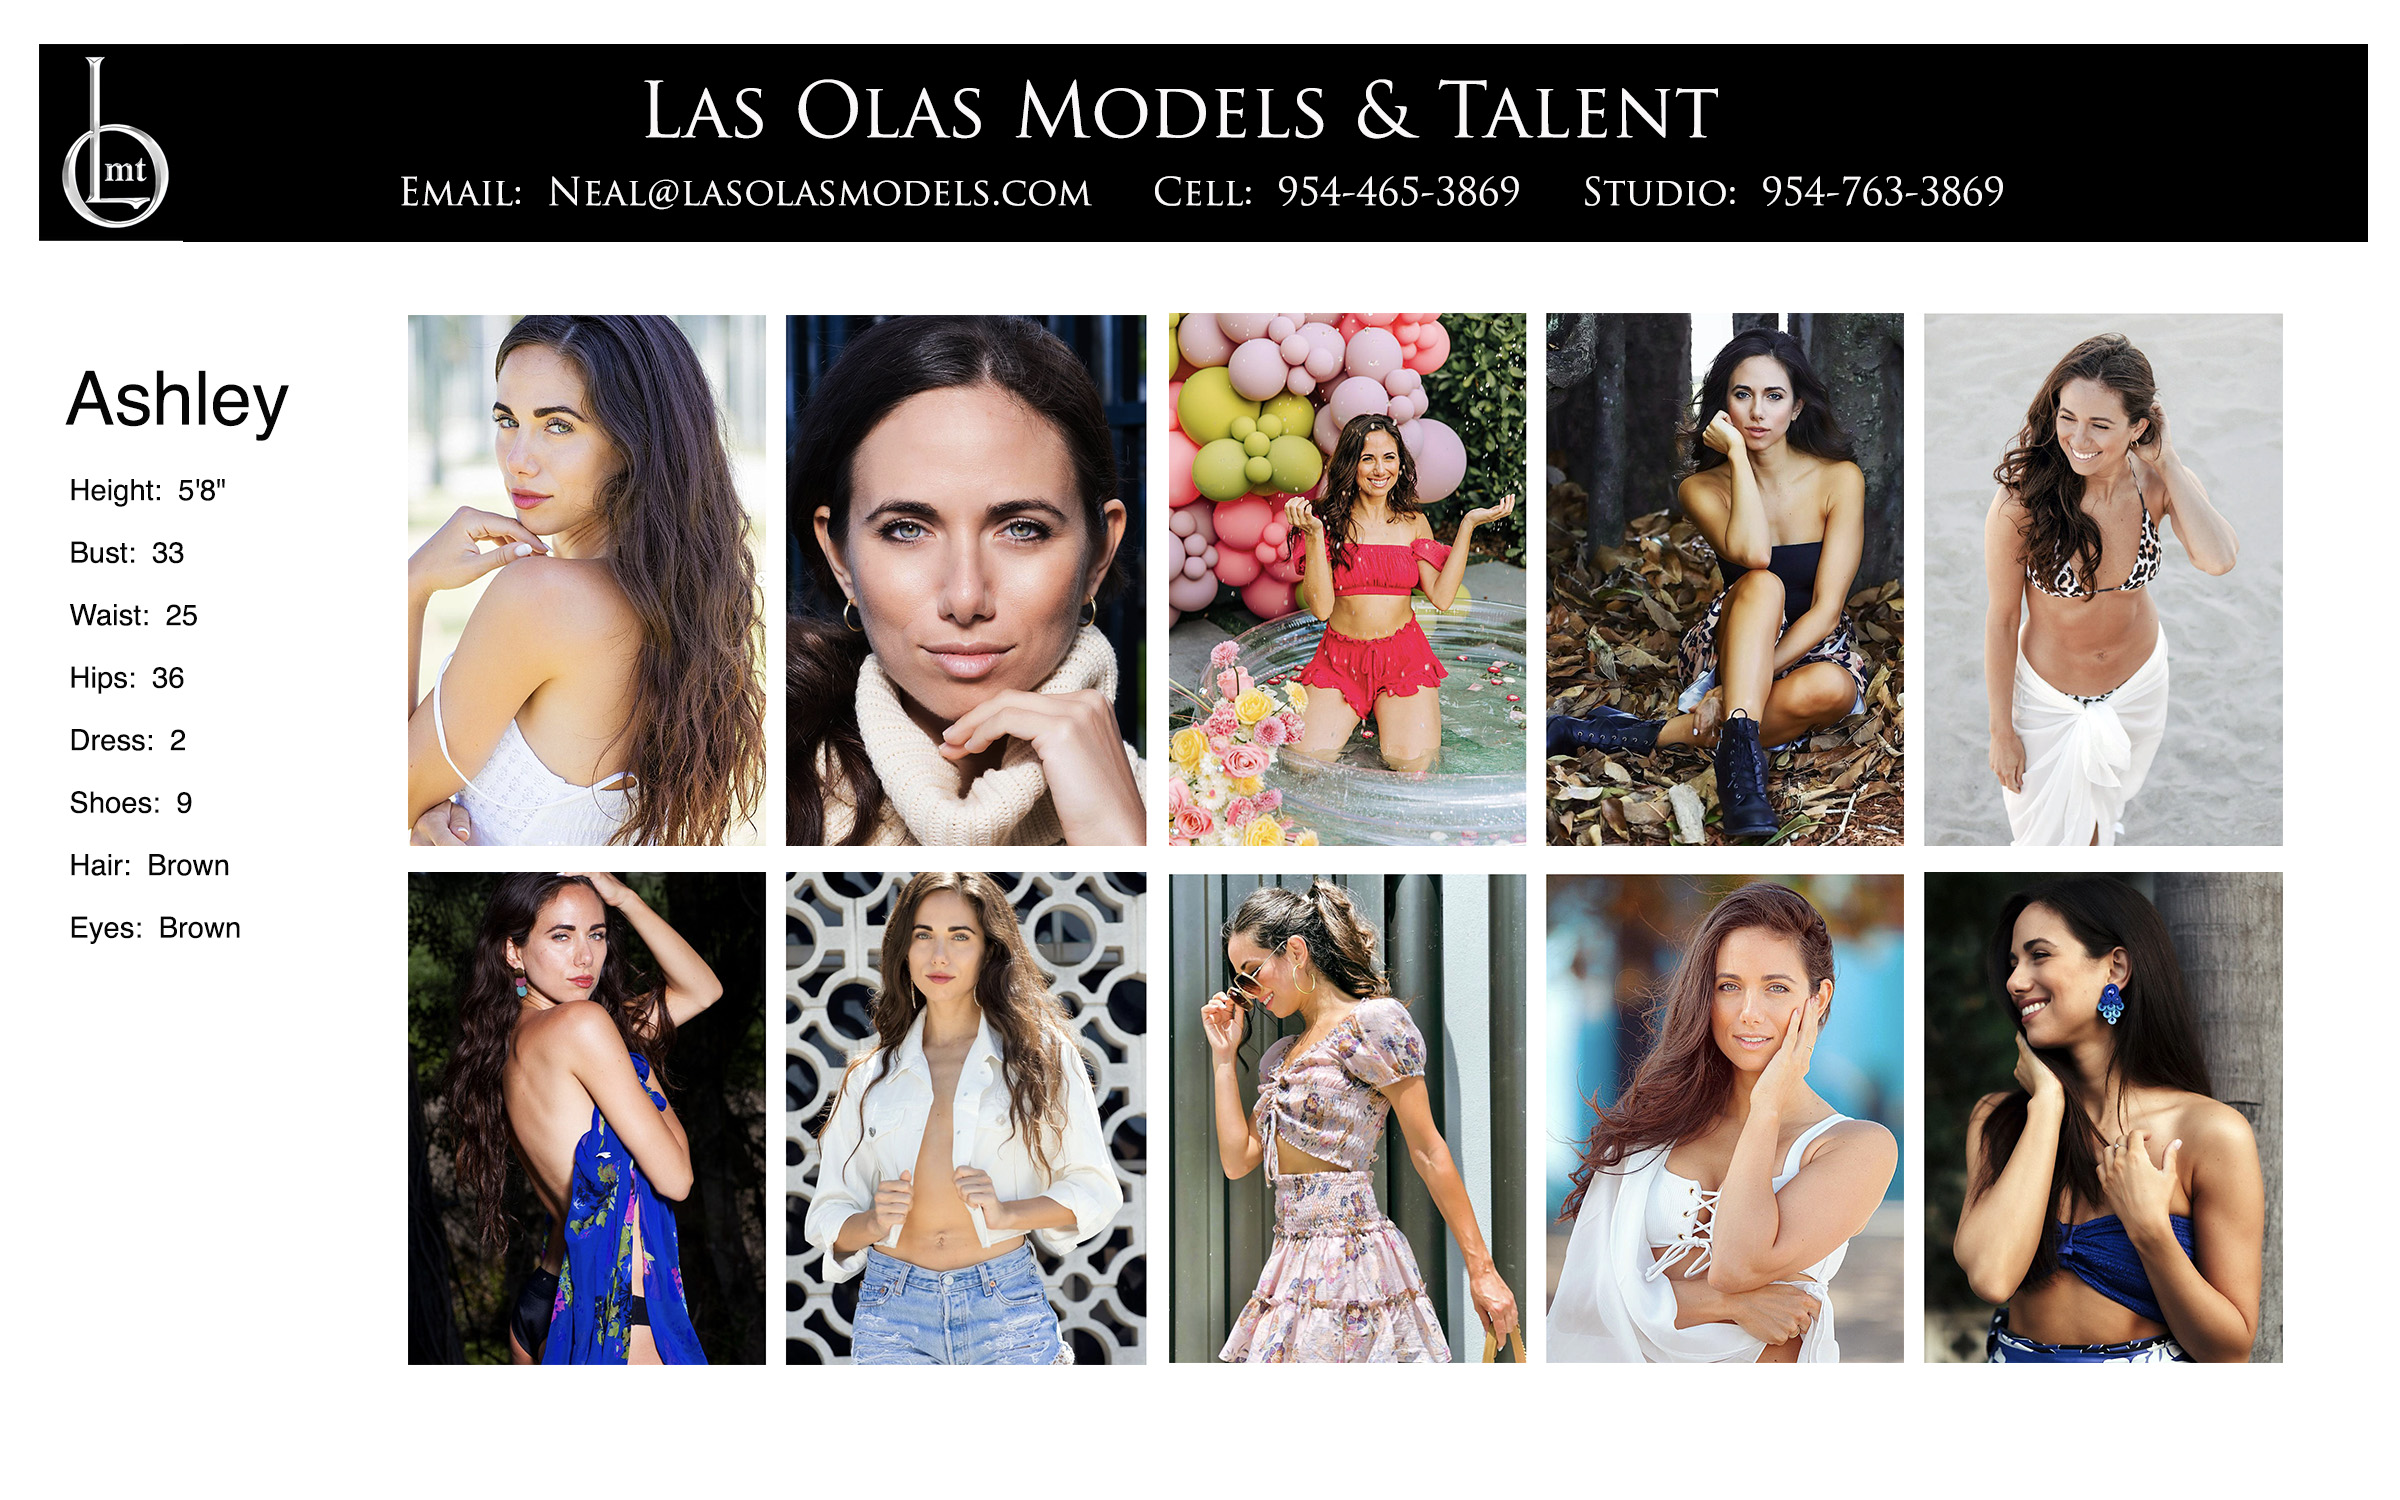 Female Model - Ashley Rose - Fort Lauderdale - Miami - South Florida - Palm Beach - Las Olas Models and Talent Ft. Lauderdale - Comp